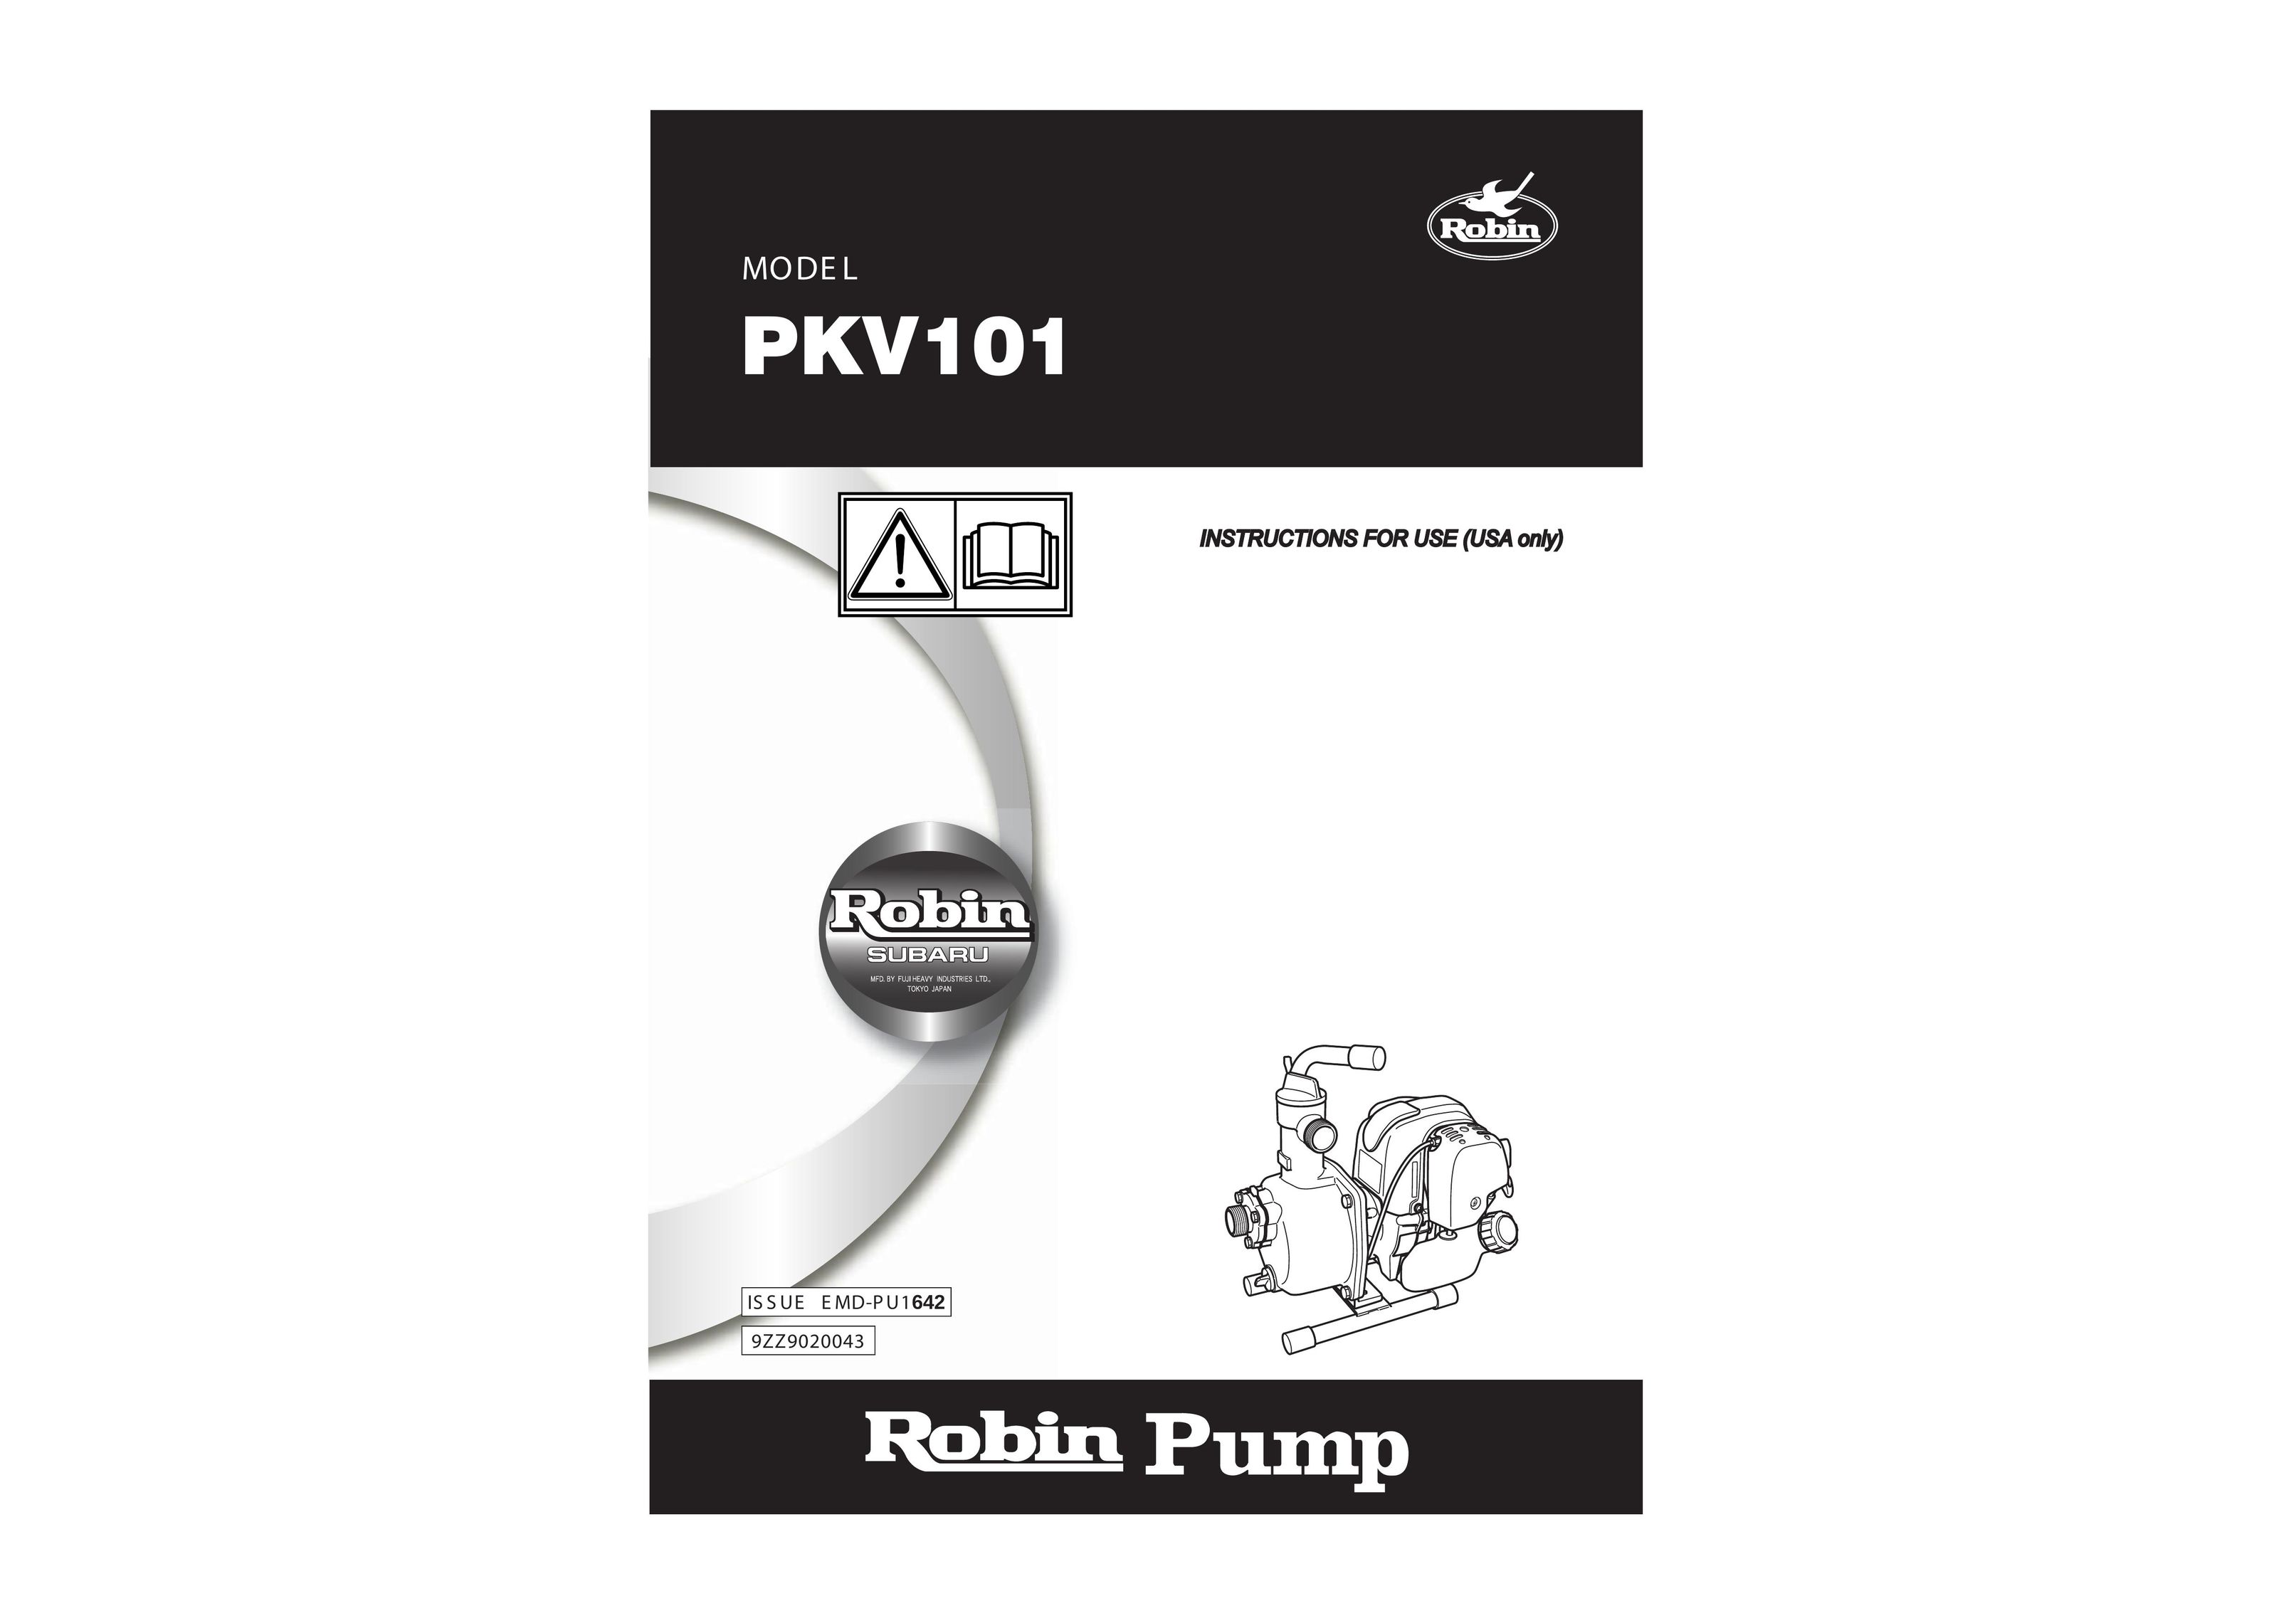 Subaru Robin Power Products PKV101 Heat Pump User Manual